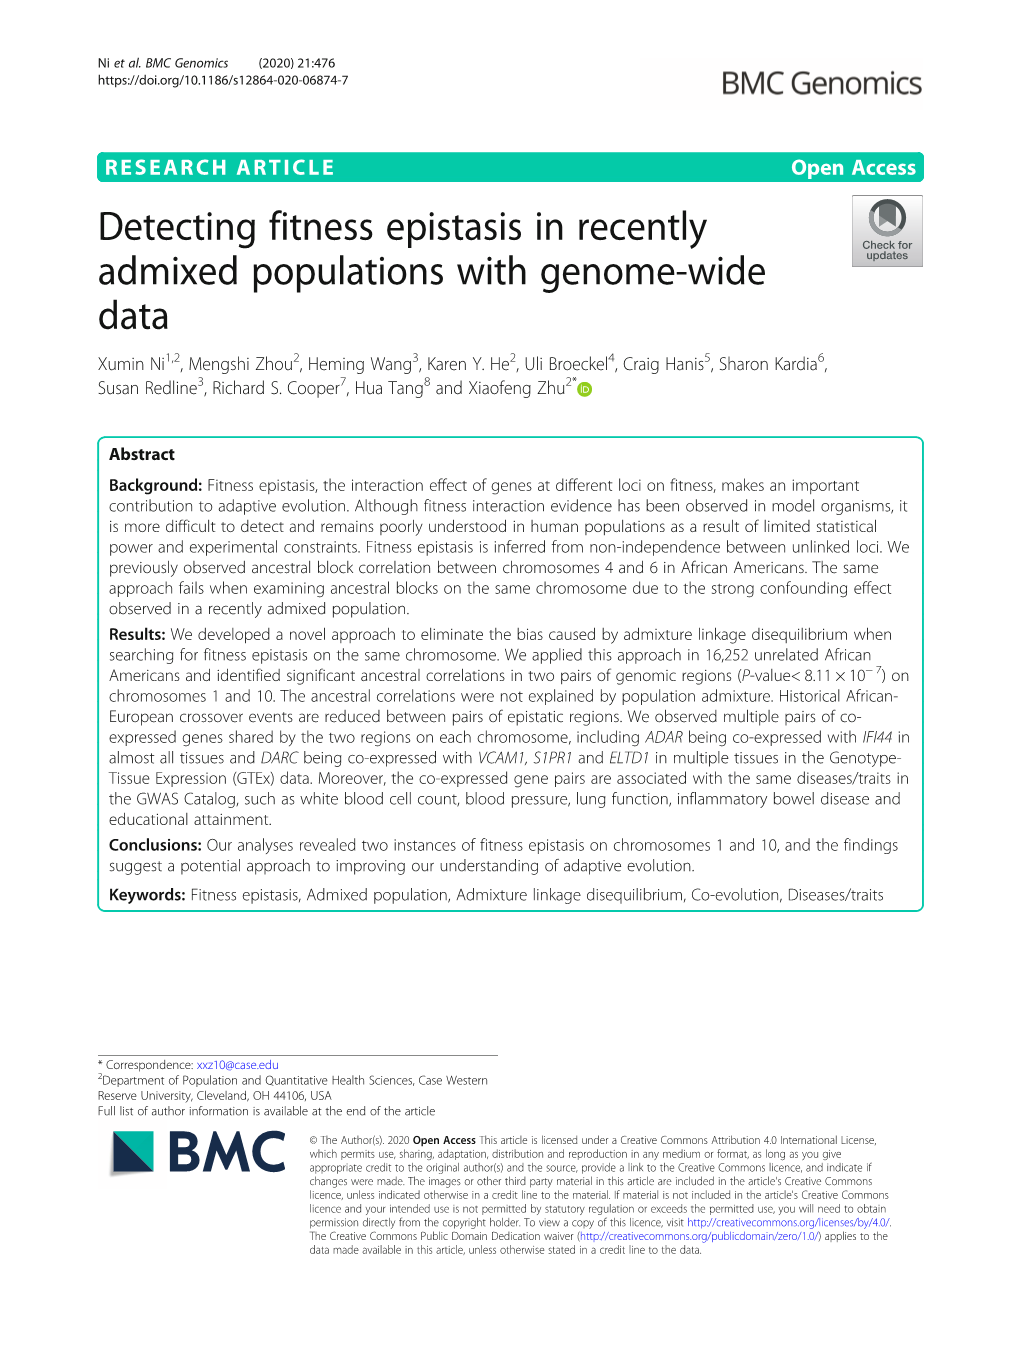 Detecting Fitness Epistasis in Recently Admixed Populations with Genome-Wide Data Xumin Ni1,2, Mengshi Zhou2, Heming Wang3, Karen Y